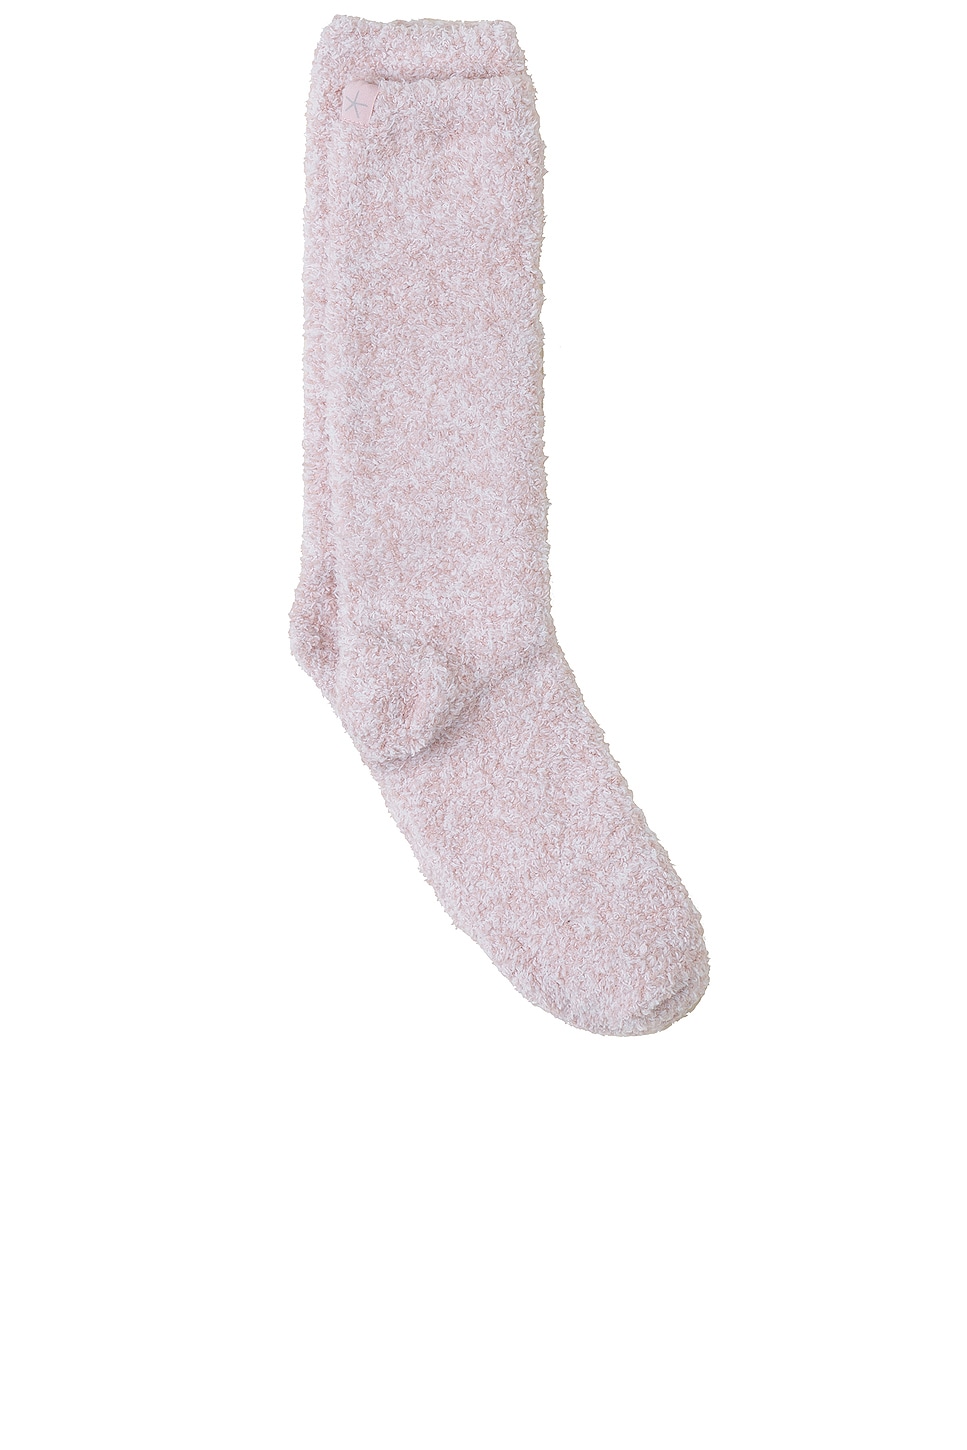 Barefoot Dreams CozyChic Womens Heathered Socks in Dusty Roswhite